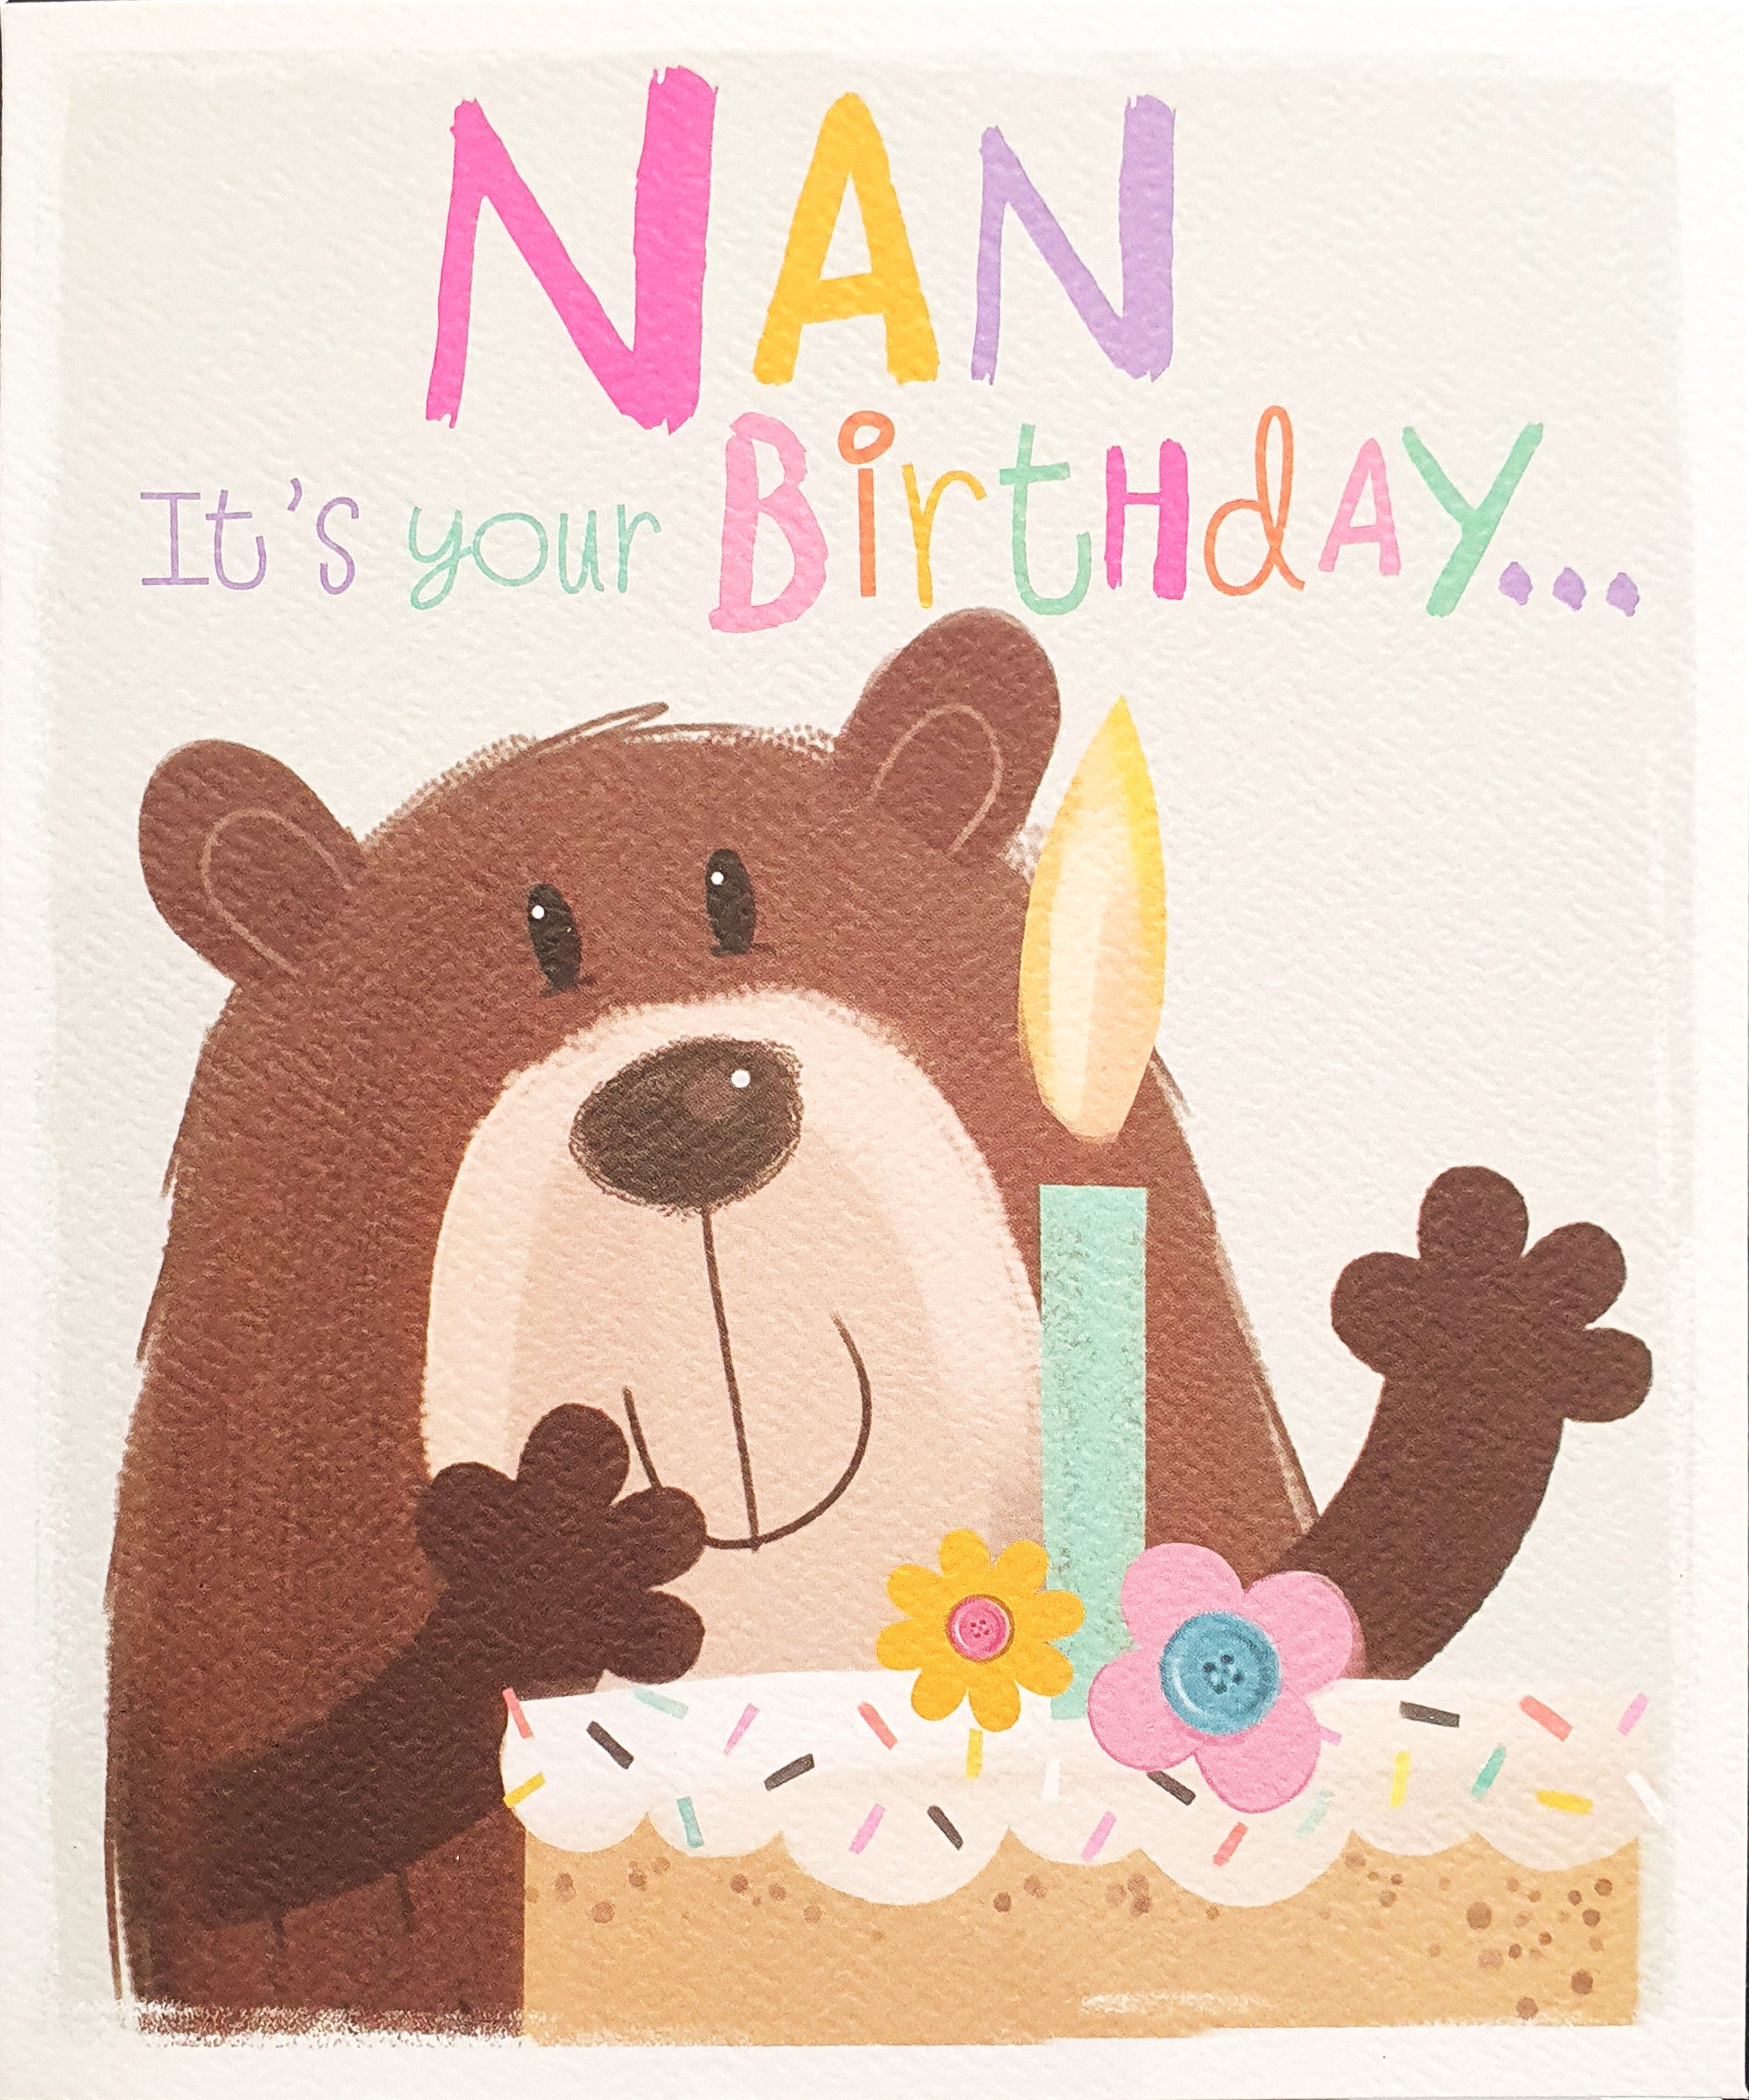 Nan Birthday Card - Gus Says